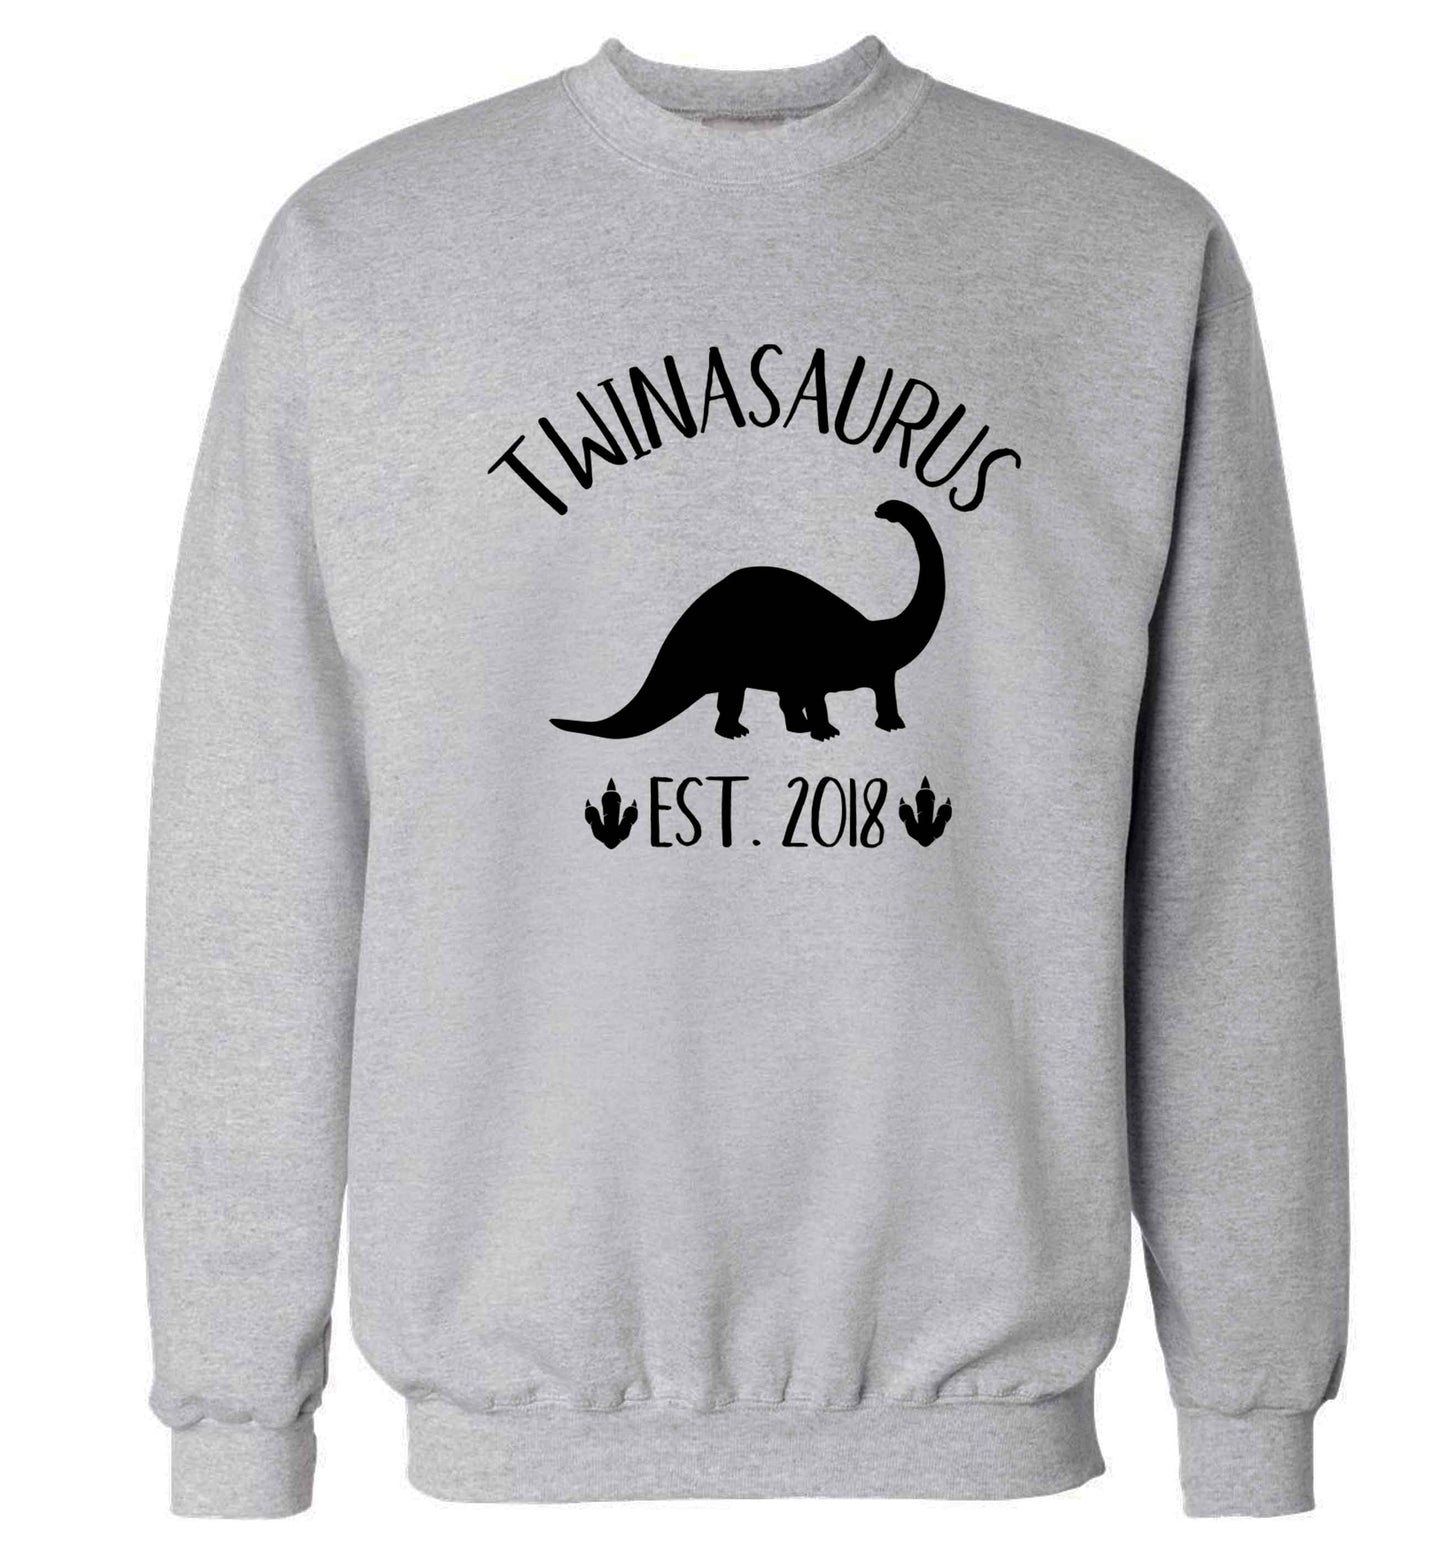 Personalised twinasaurus since (custom date) Adult's unisex grey Sweater 2XL